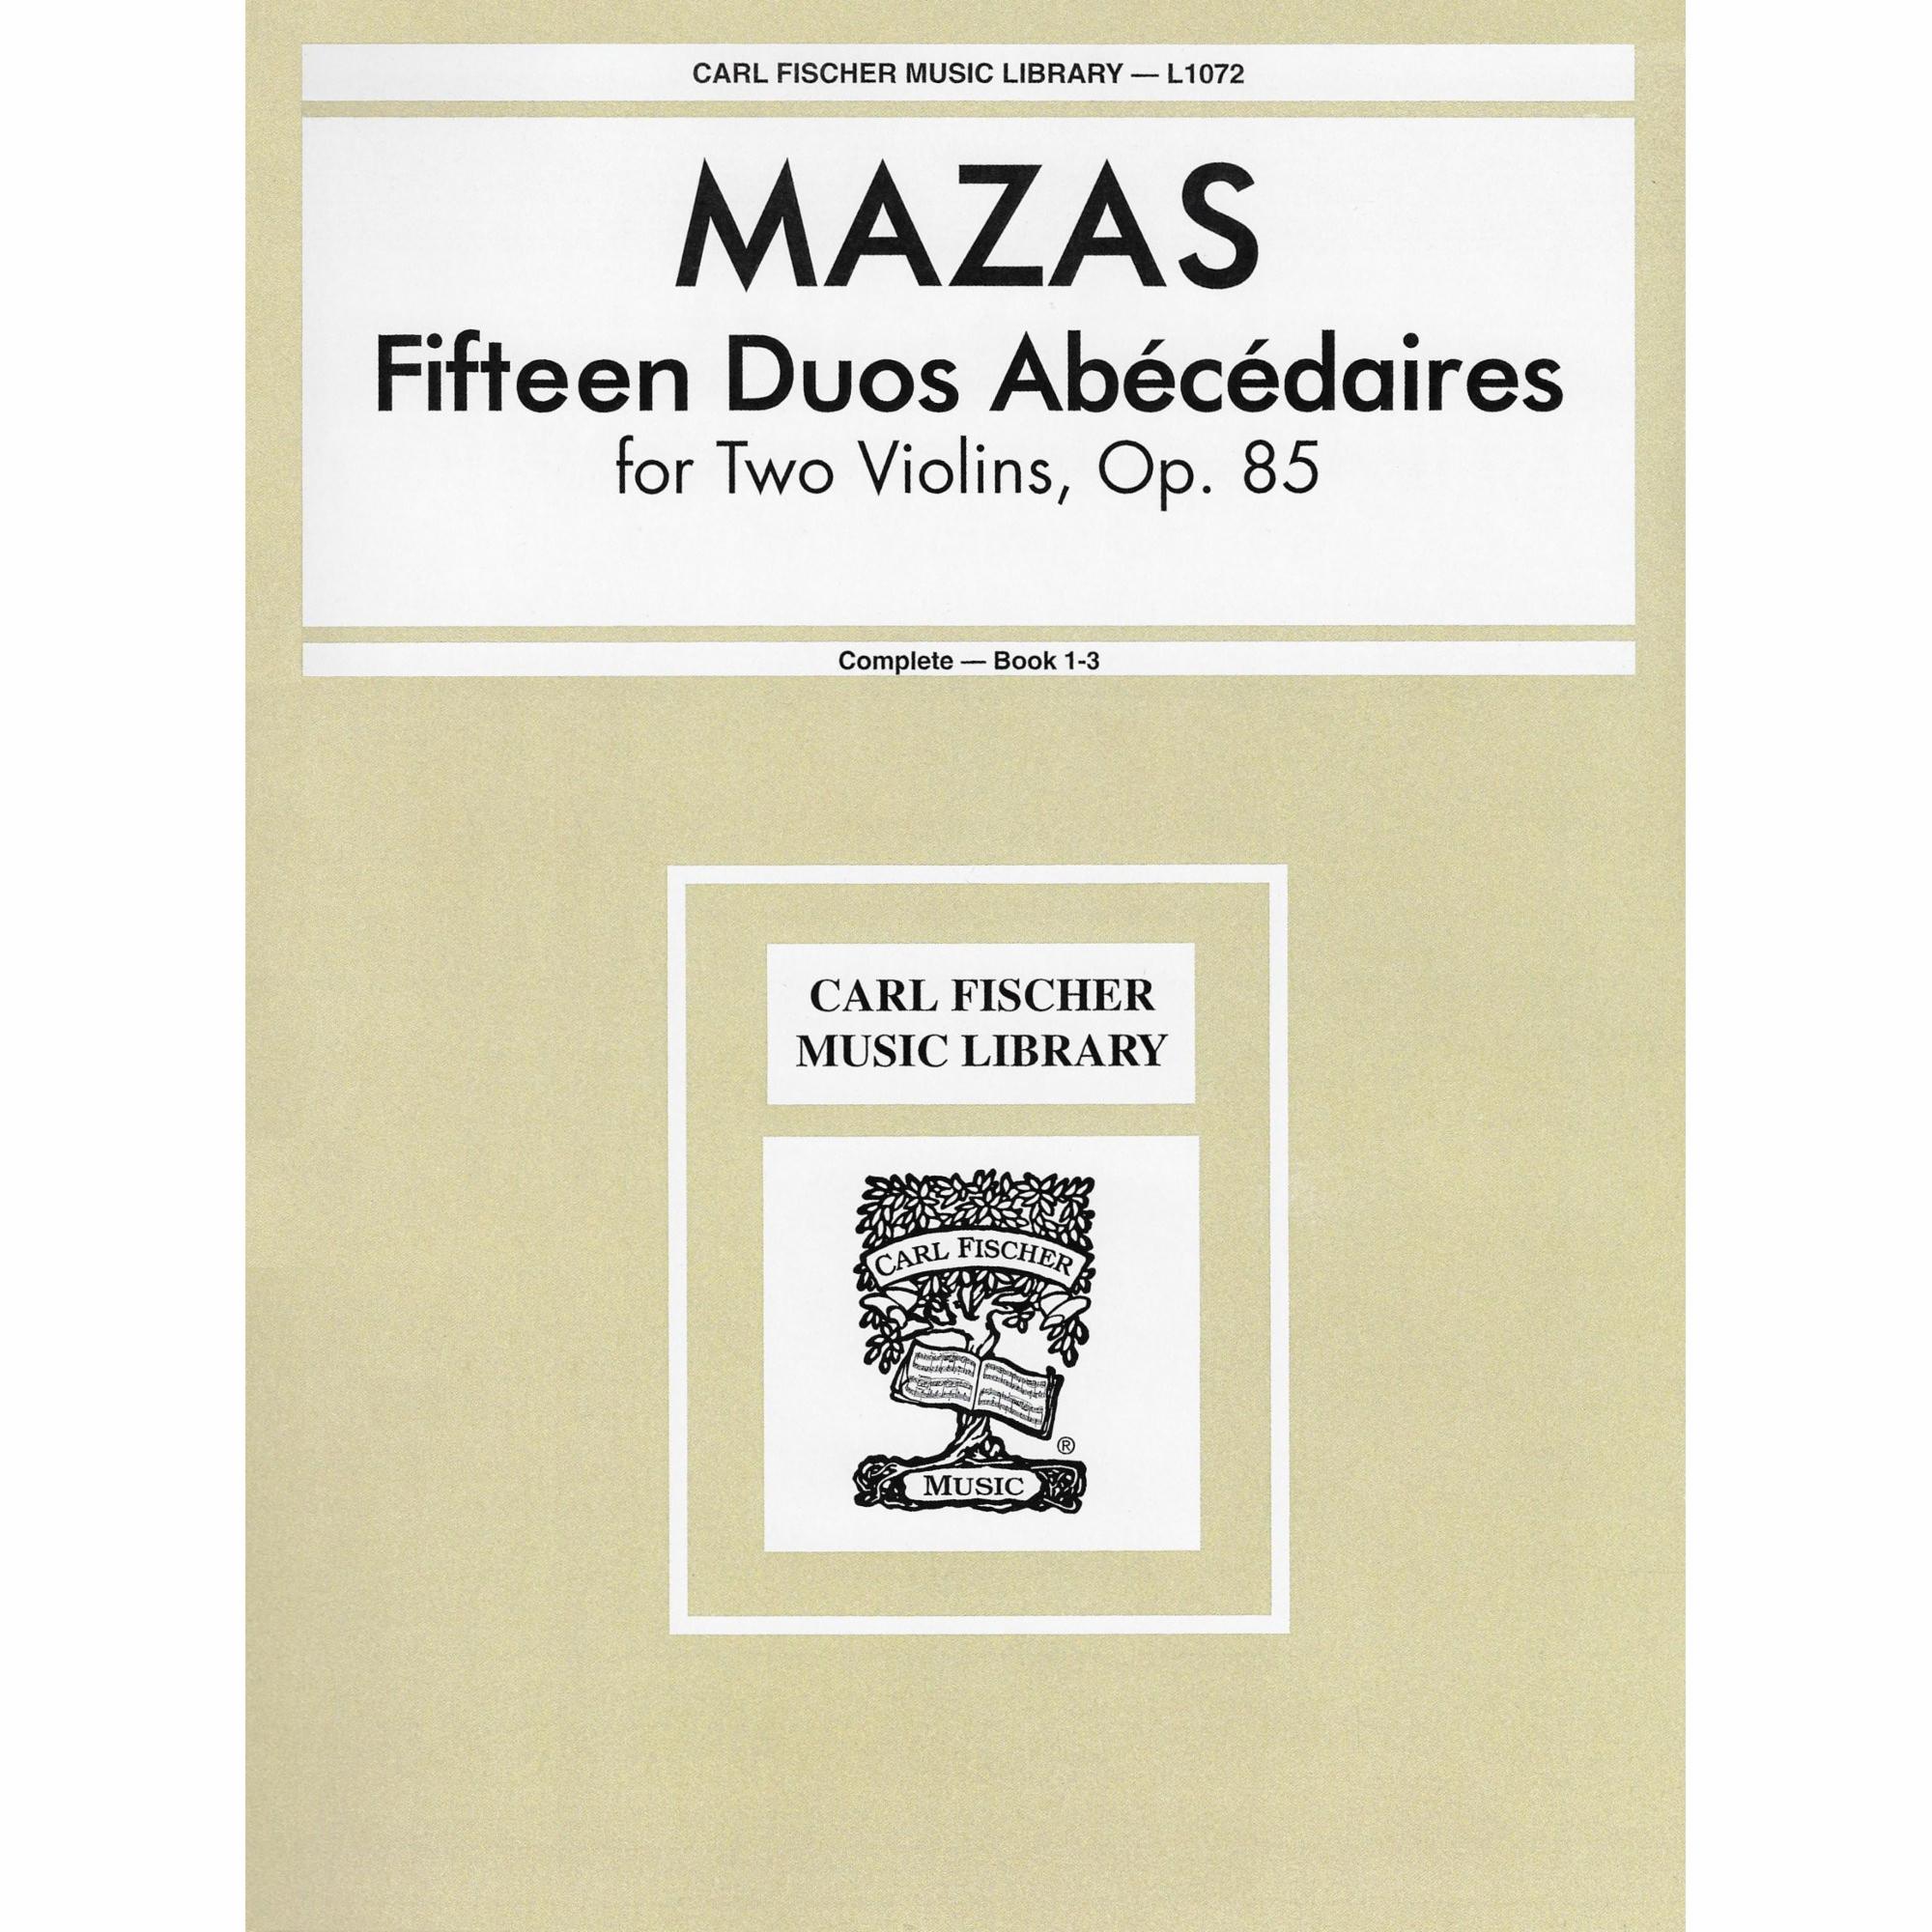 Mazas -- Fifteen Duos Abecedaires, Op. 85 for Two Violins